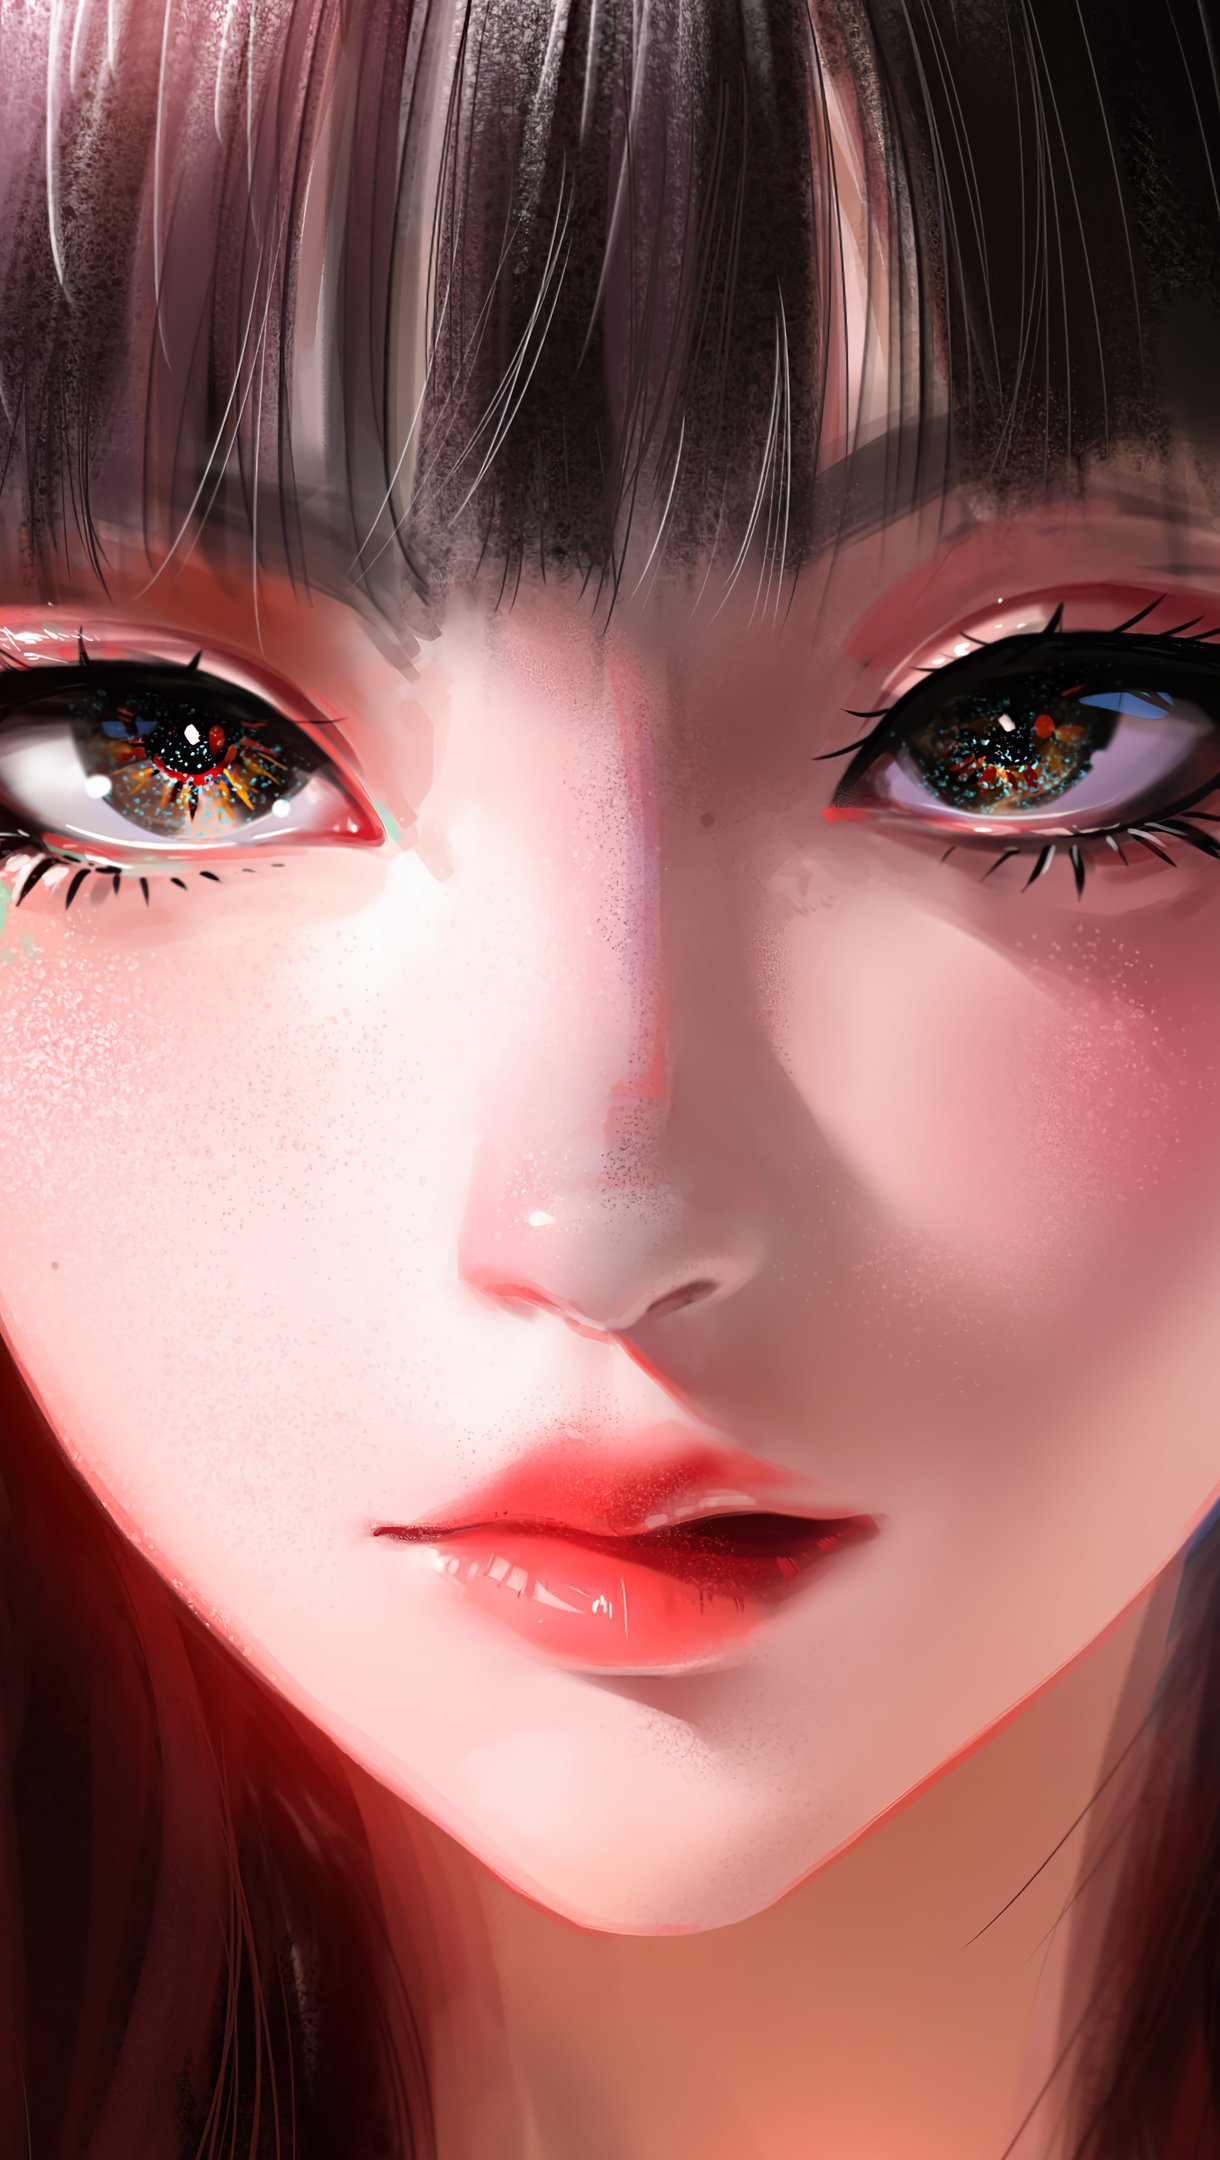 Anime Girl Digital Art Wallpaper 4K Hd Id:9879